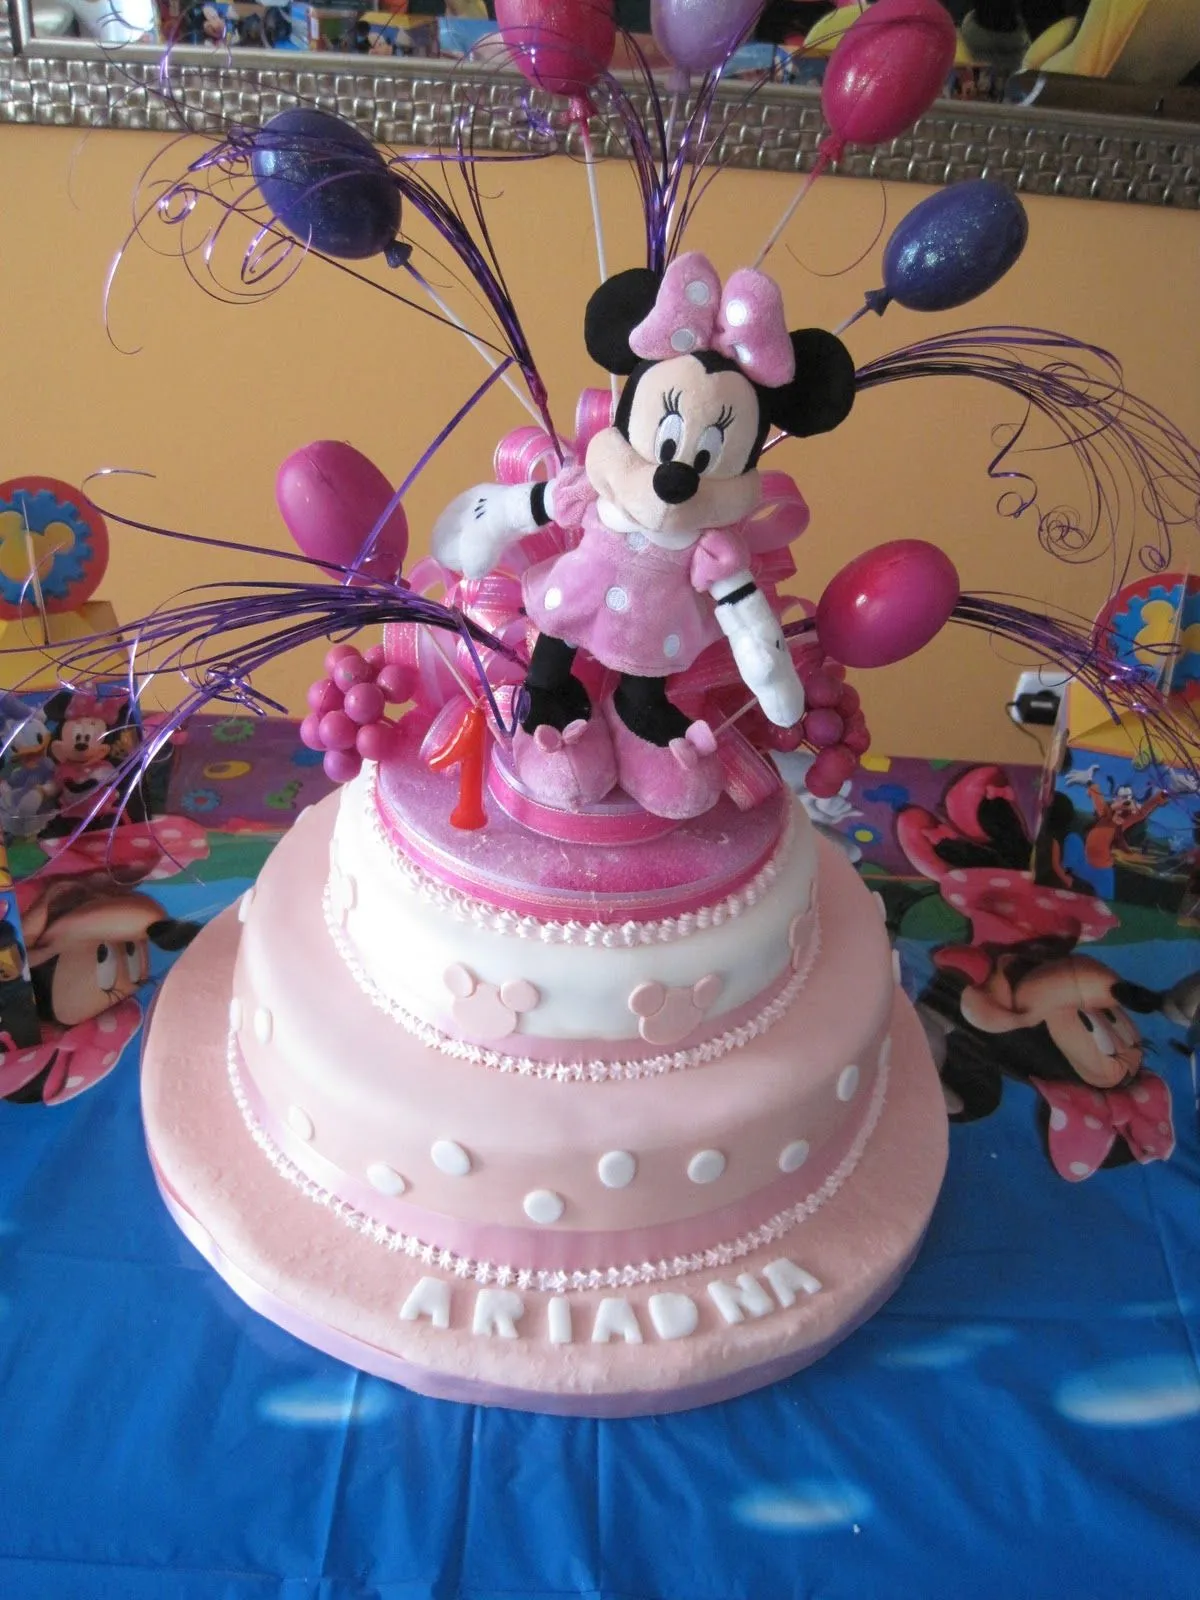 Bizcochos de cumpleaños de Minnie Mouse - Imagui